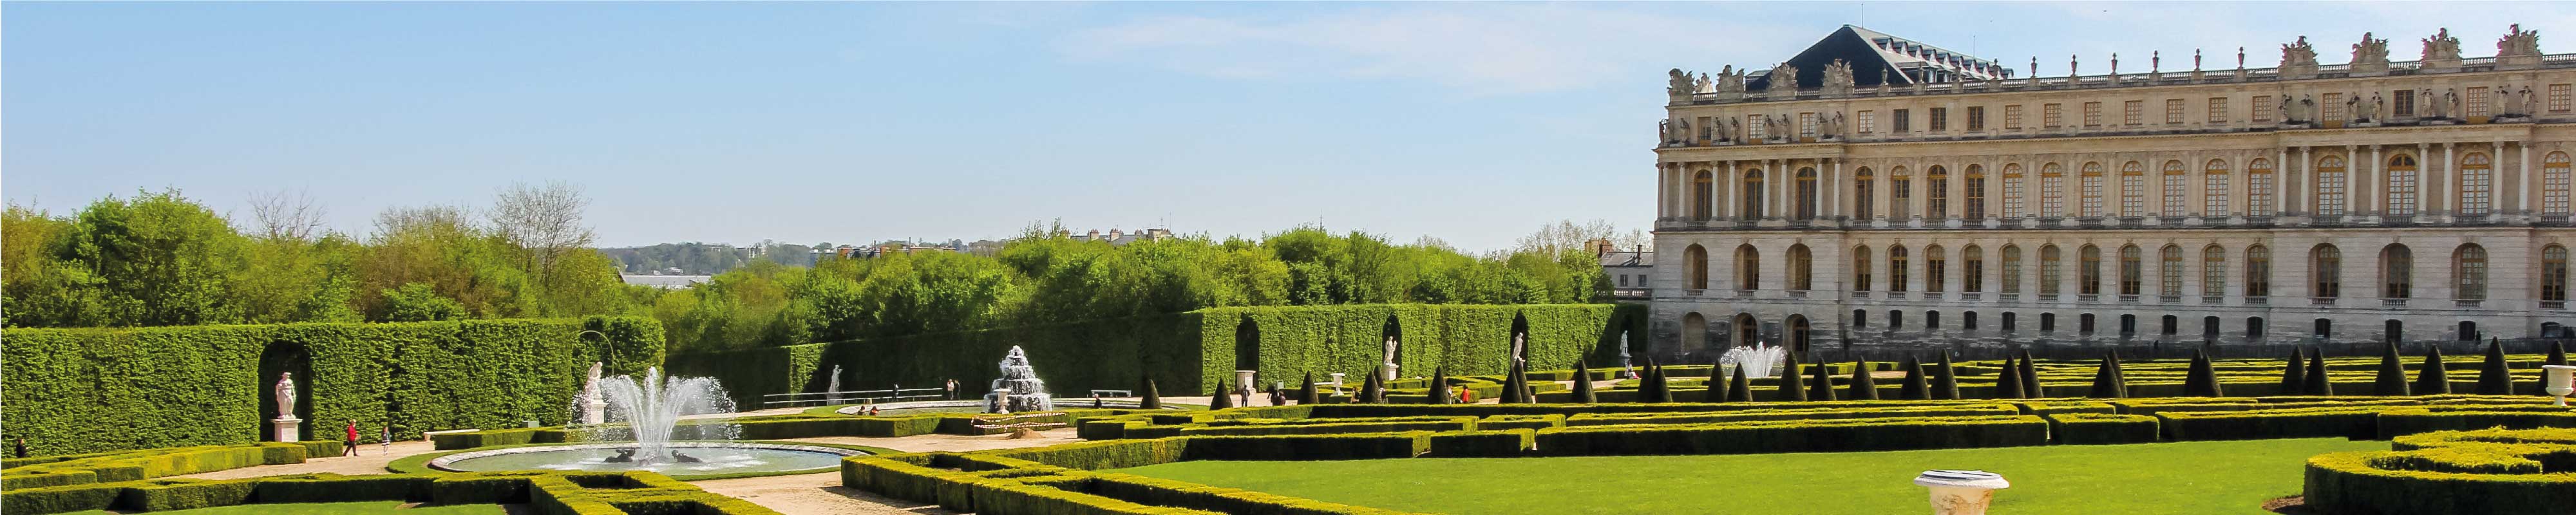 Consigna Equipaje | Palacio de Versalles en Versalles - Nannybag